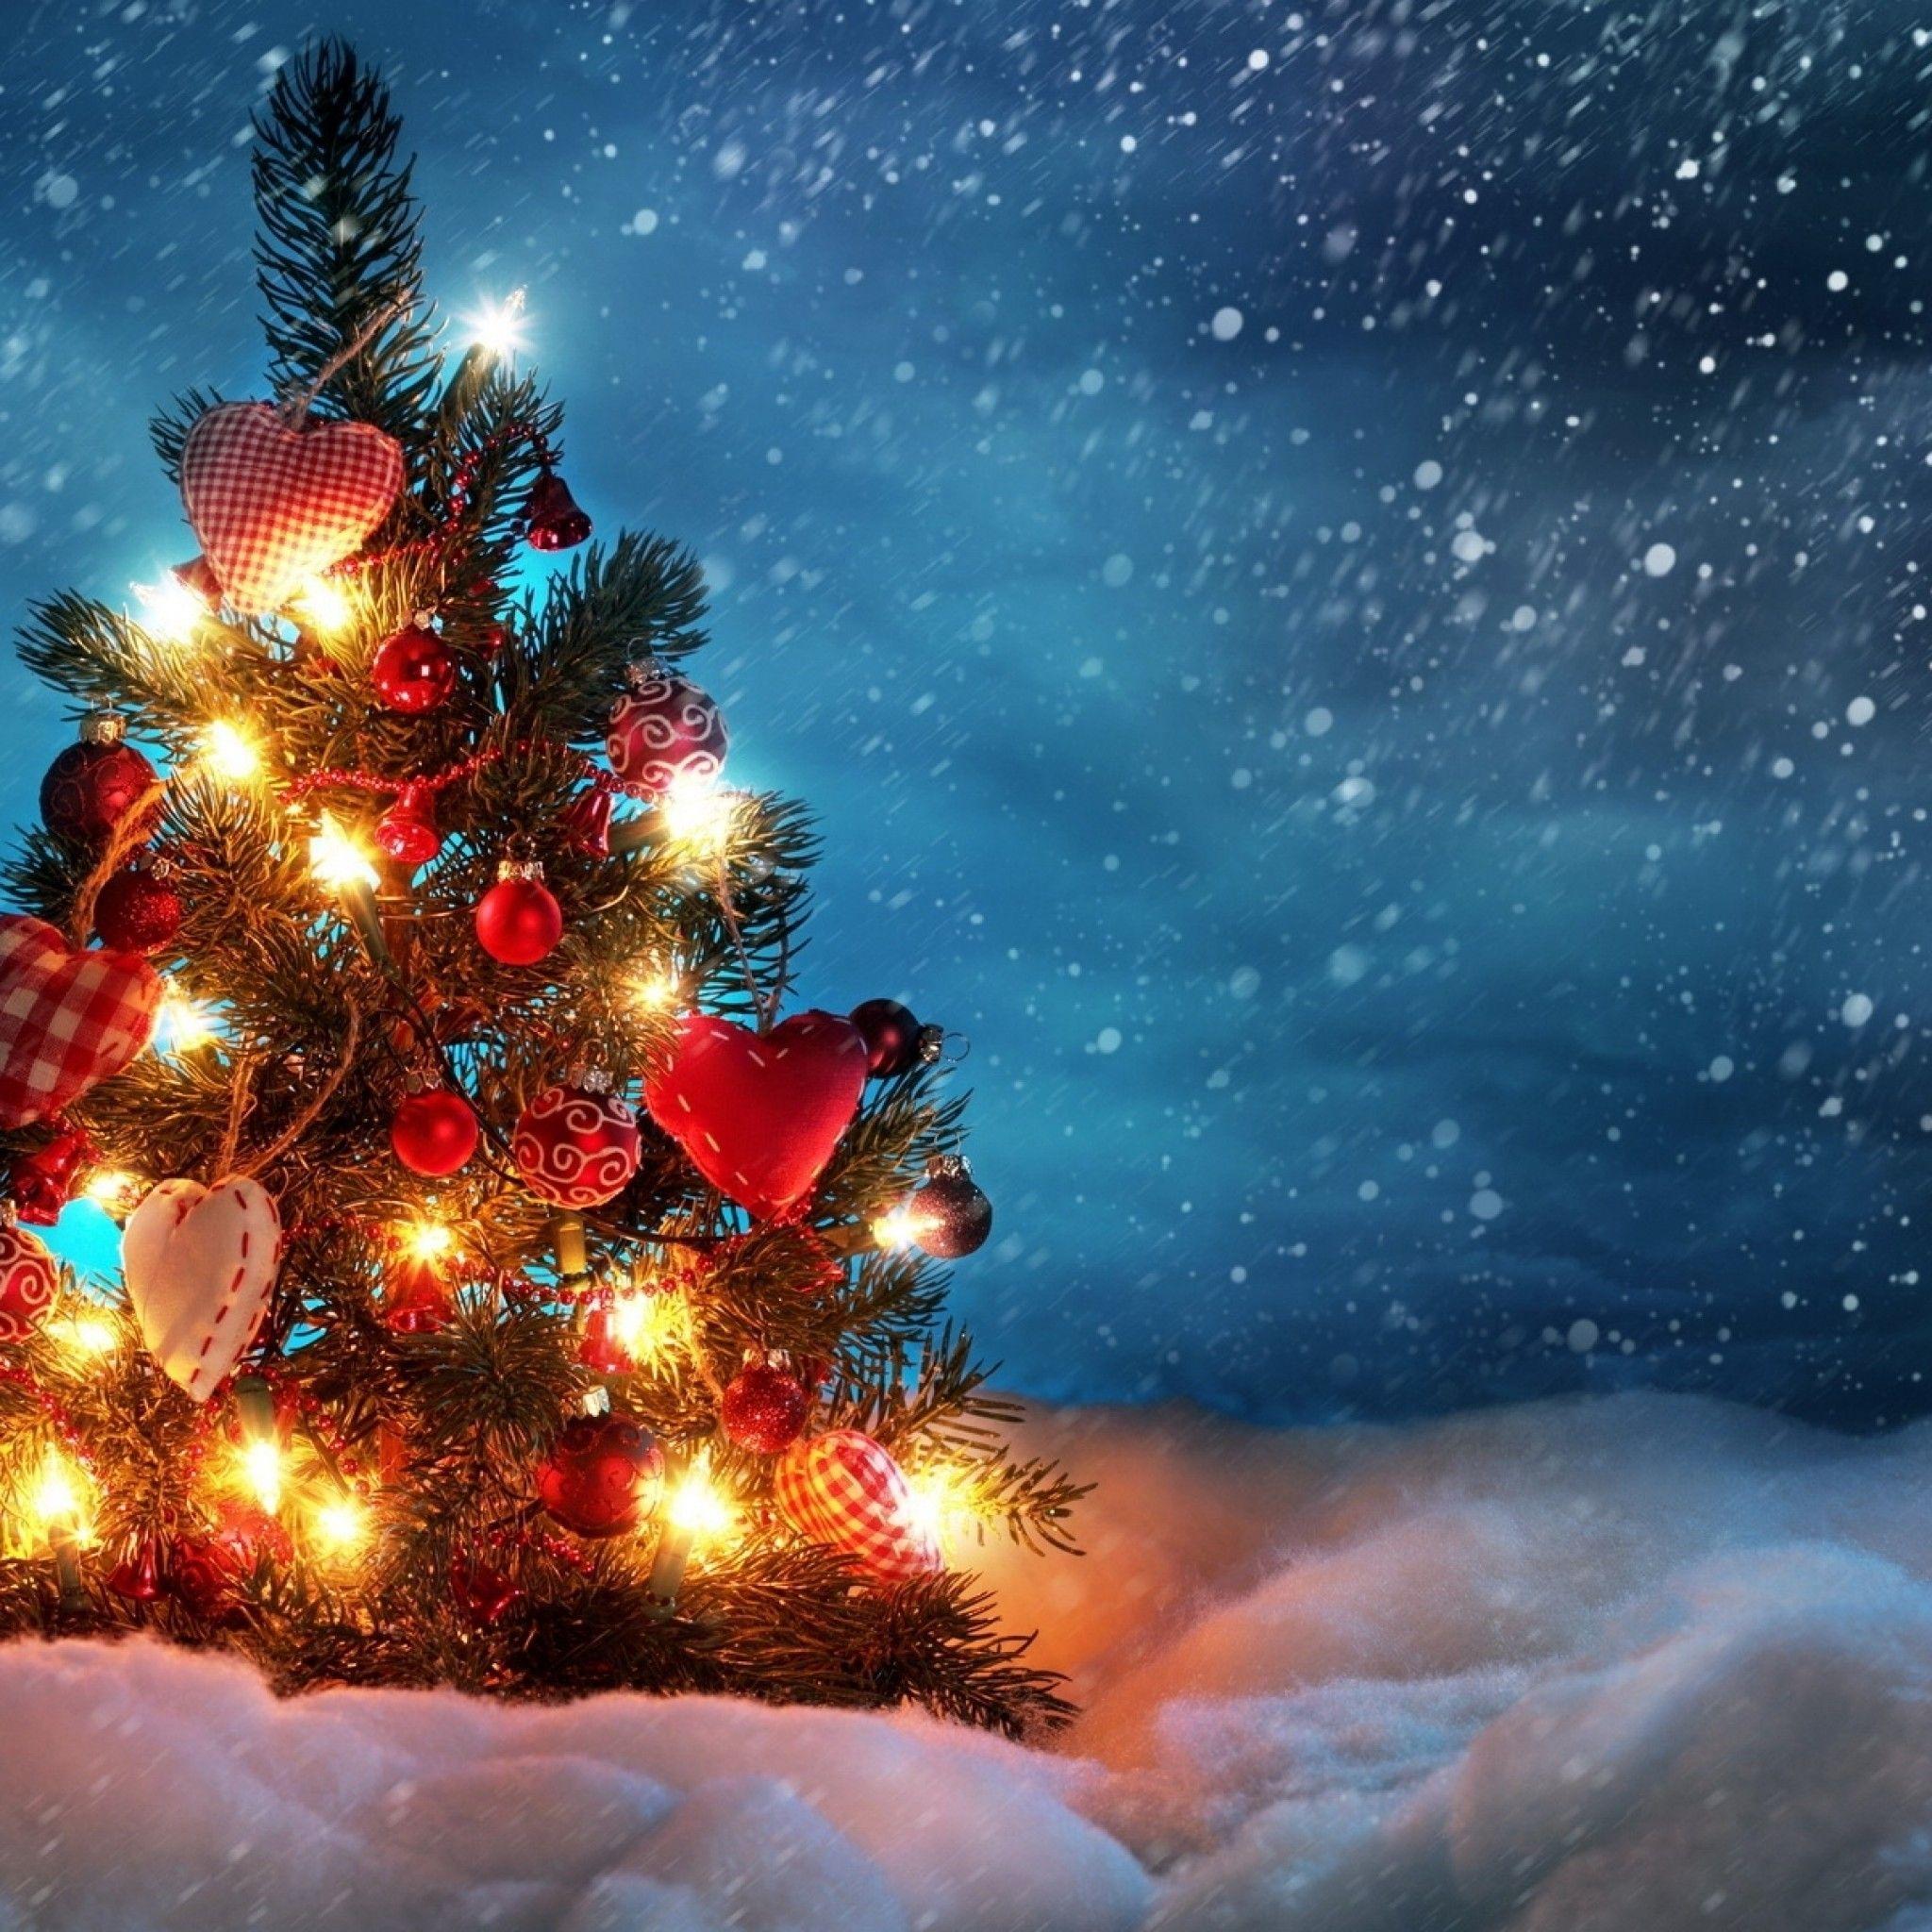 3d Christmas Background Images - Free Download on Freepik